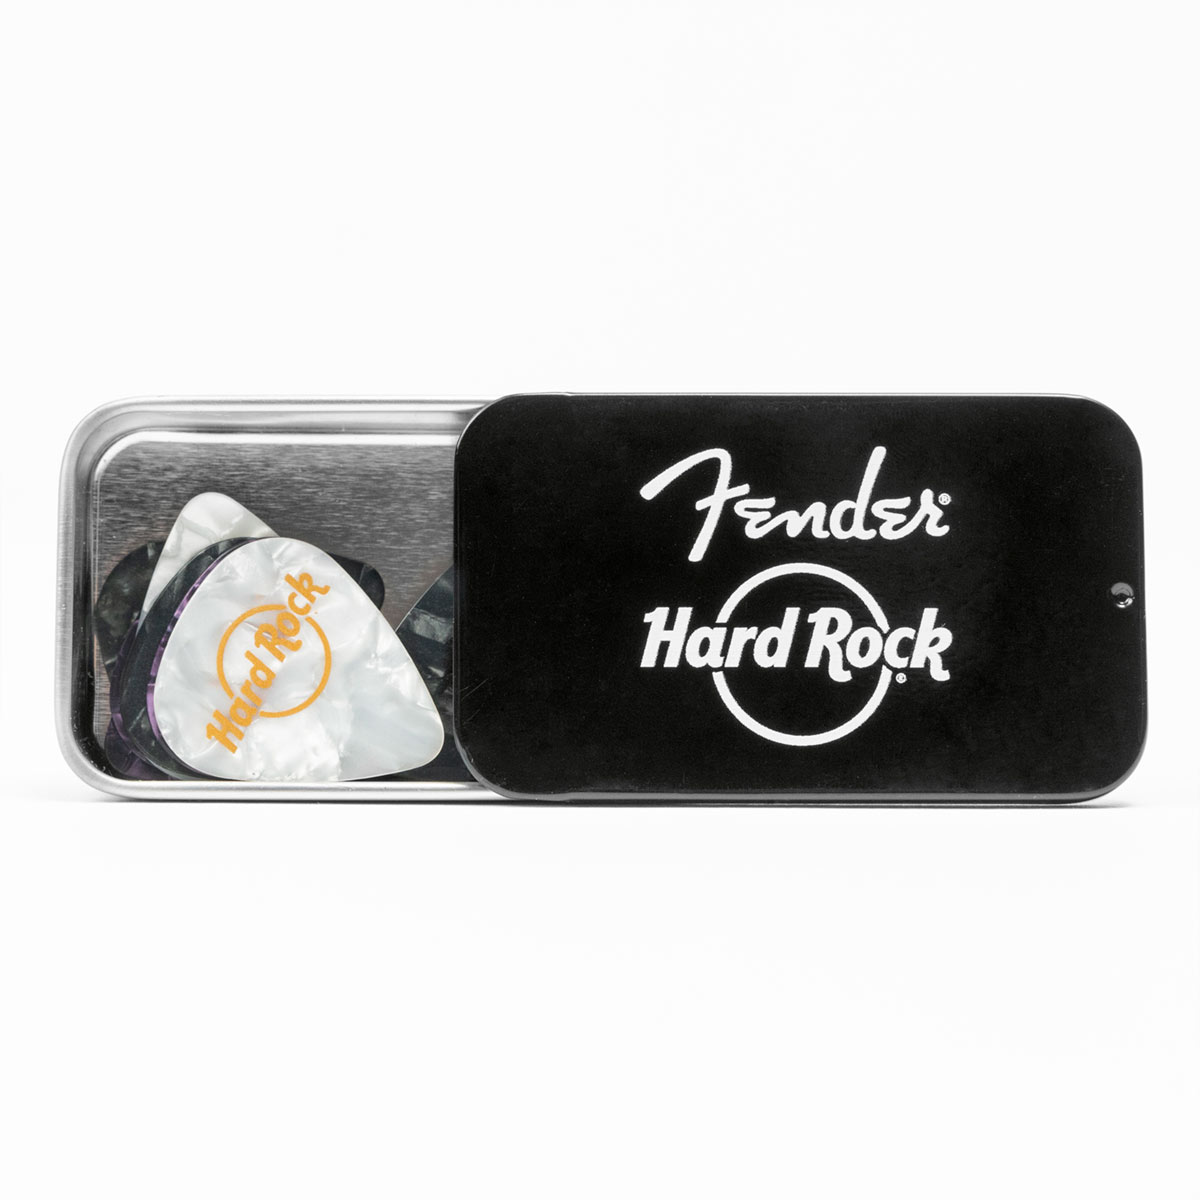 Fender x Hard Rock 12pk Guitar Pick Tin Case image number 8